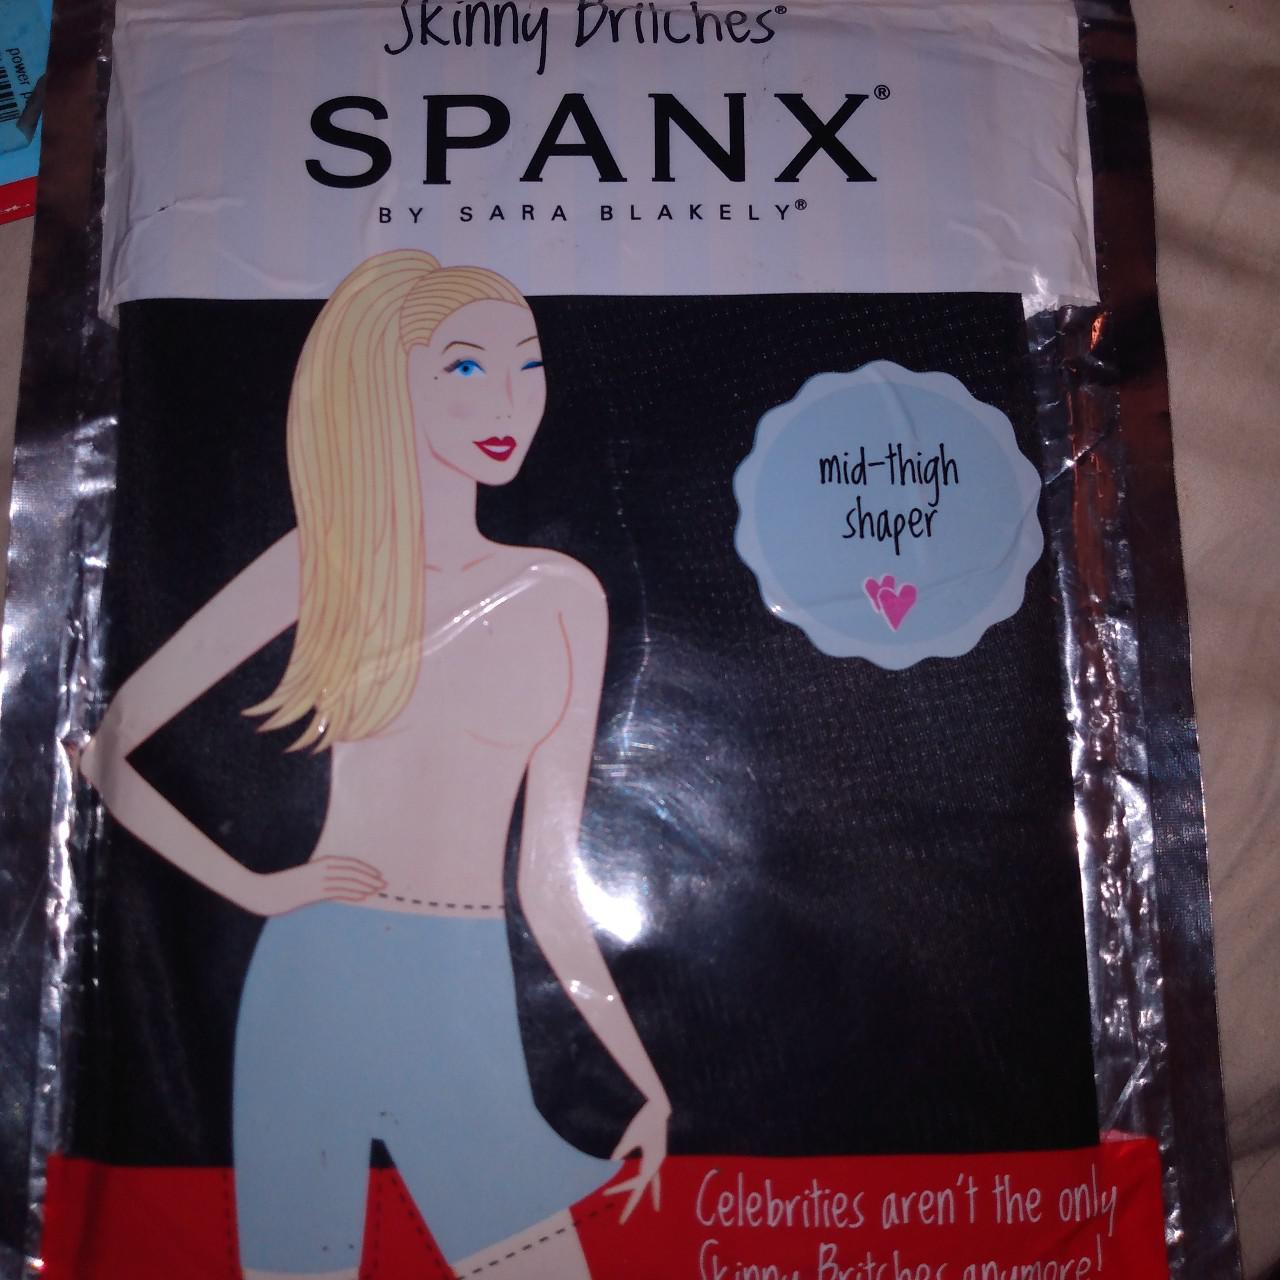 Spanx Women's Skinny Britches Thigh Slimmer, Black (Very